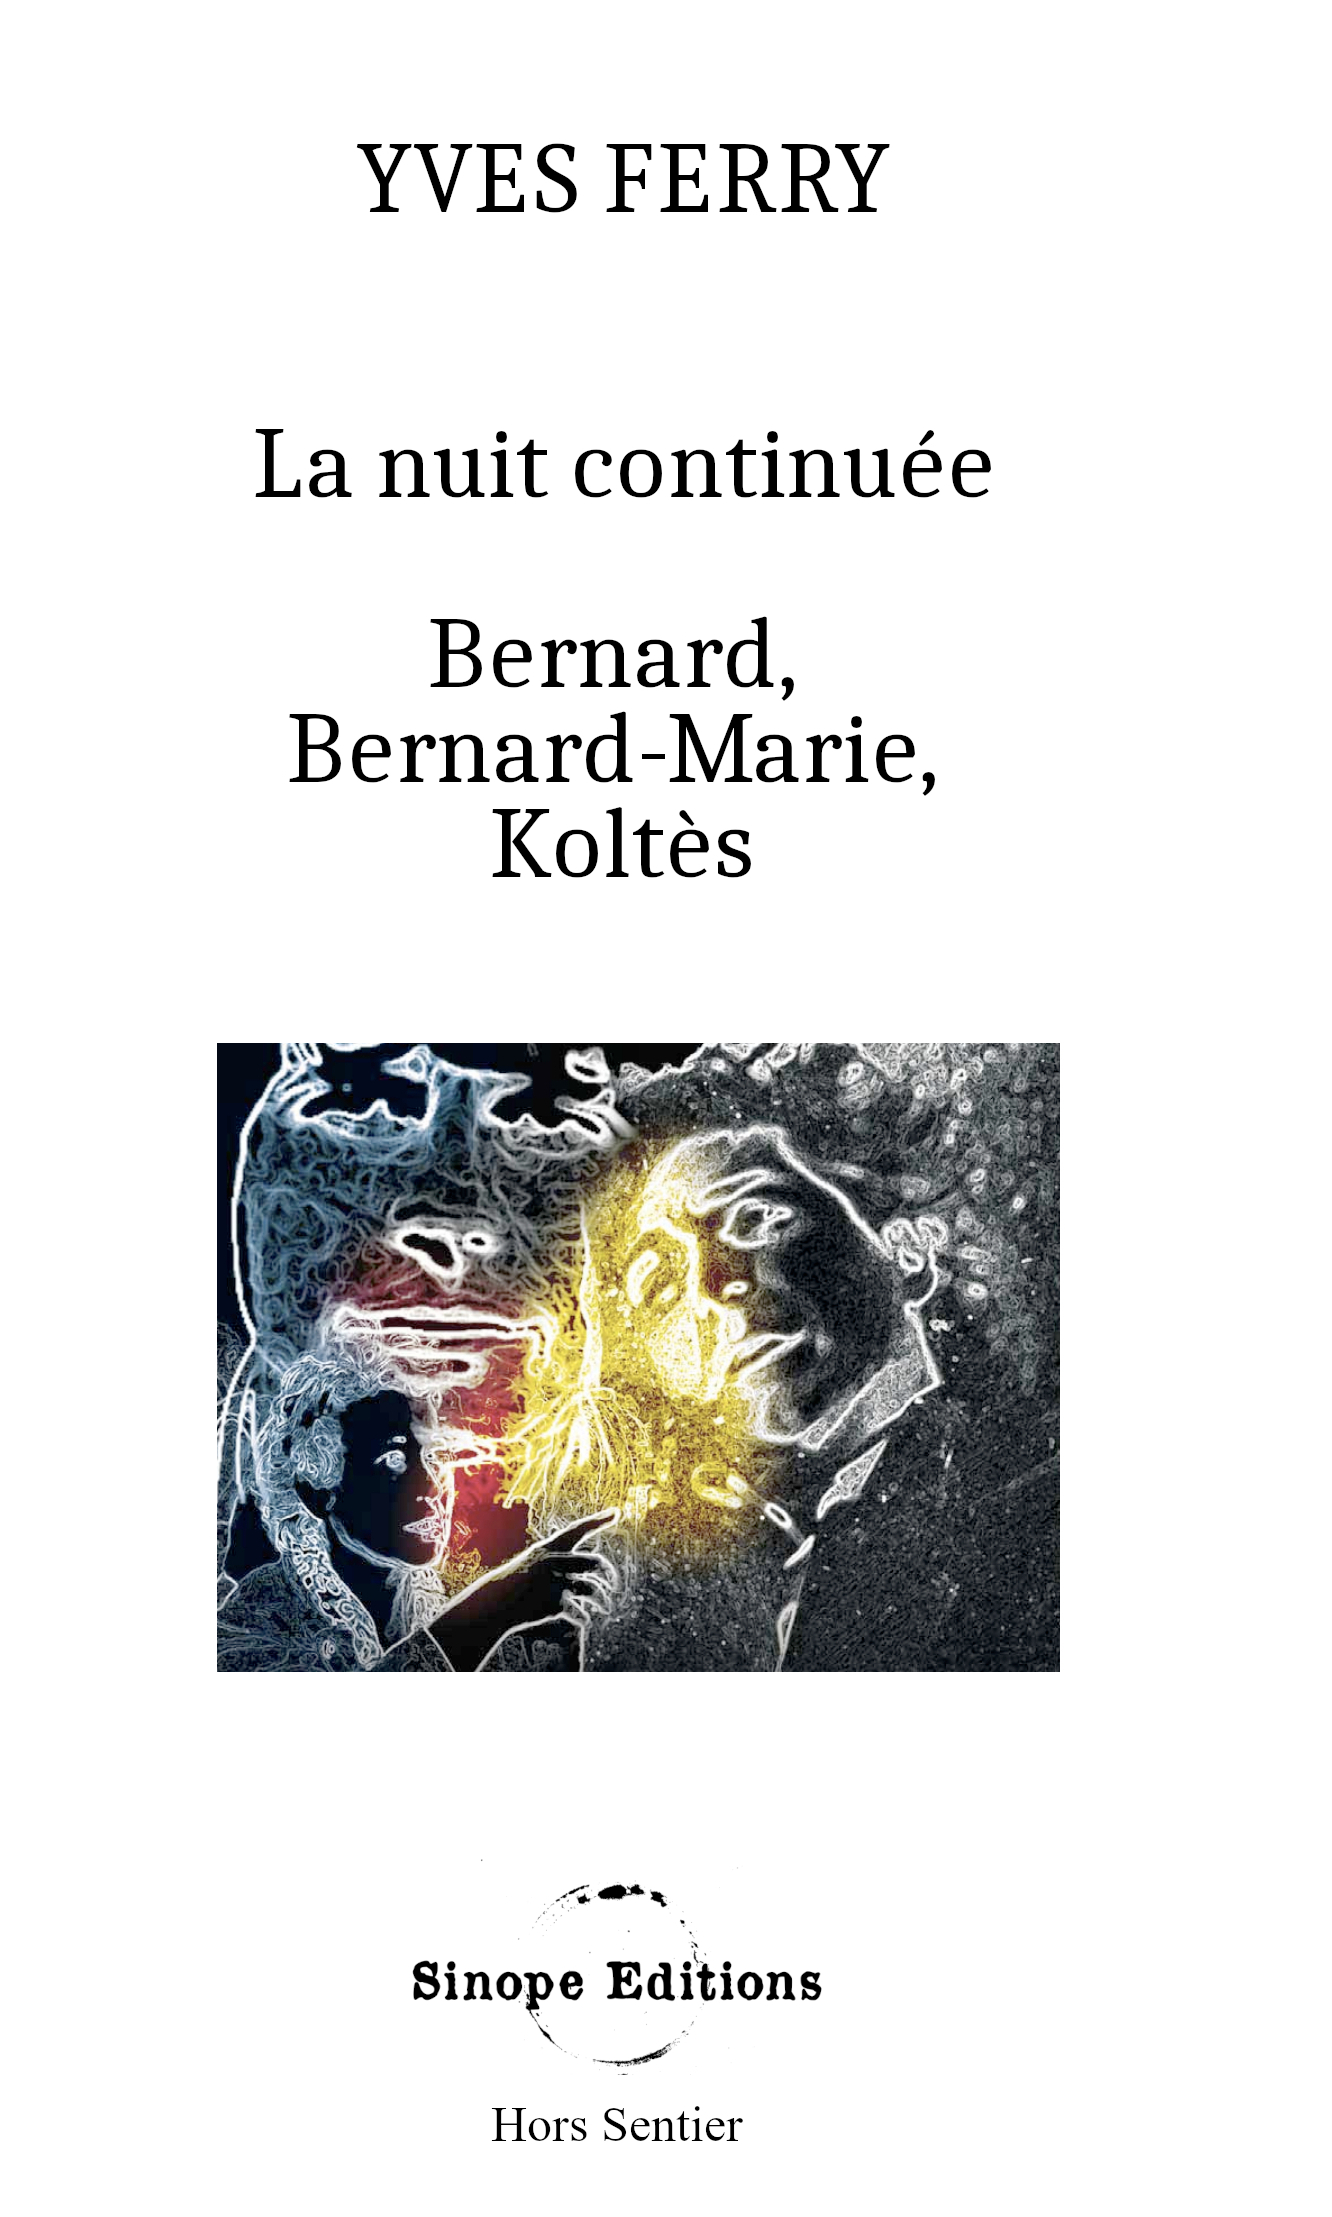 La nuit continuée, Bernard, Bernard-Marie, Koltès, Yves Ferry